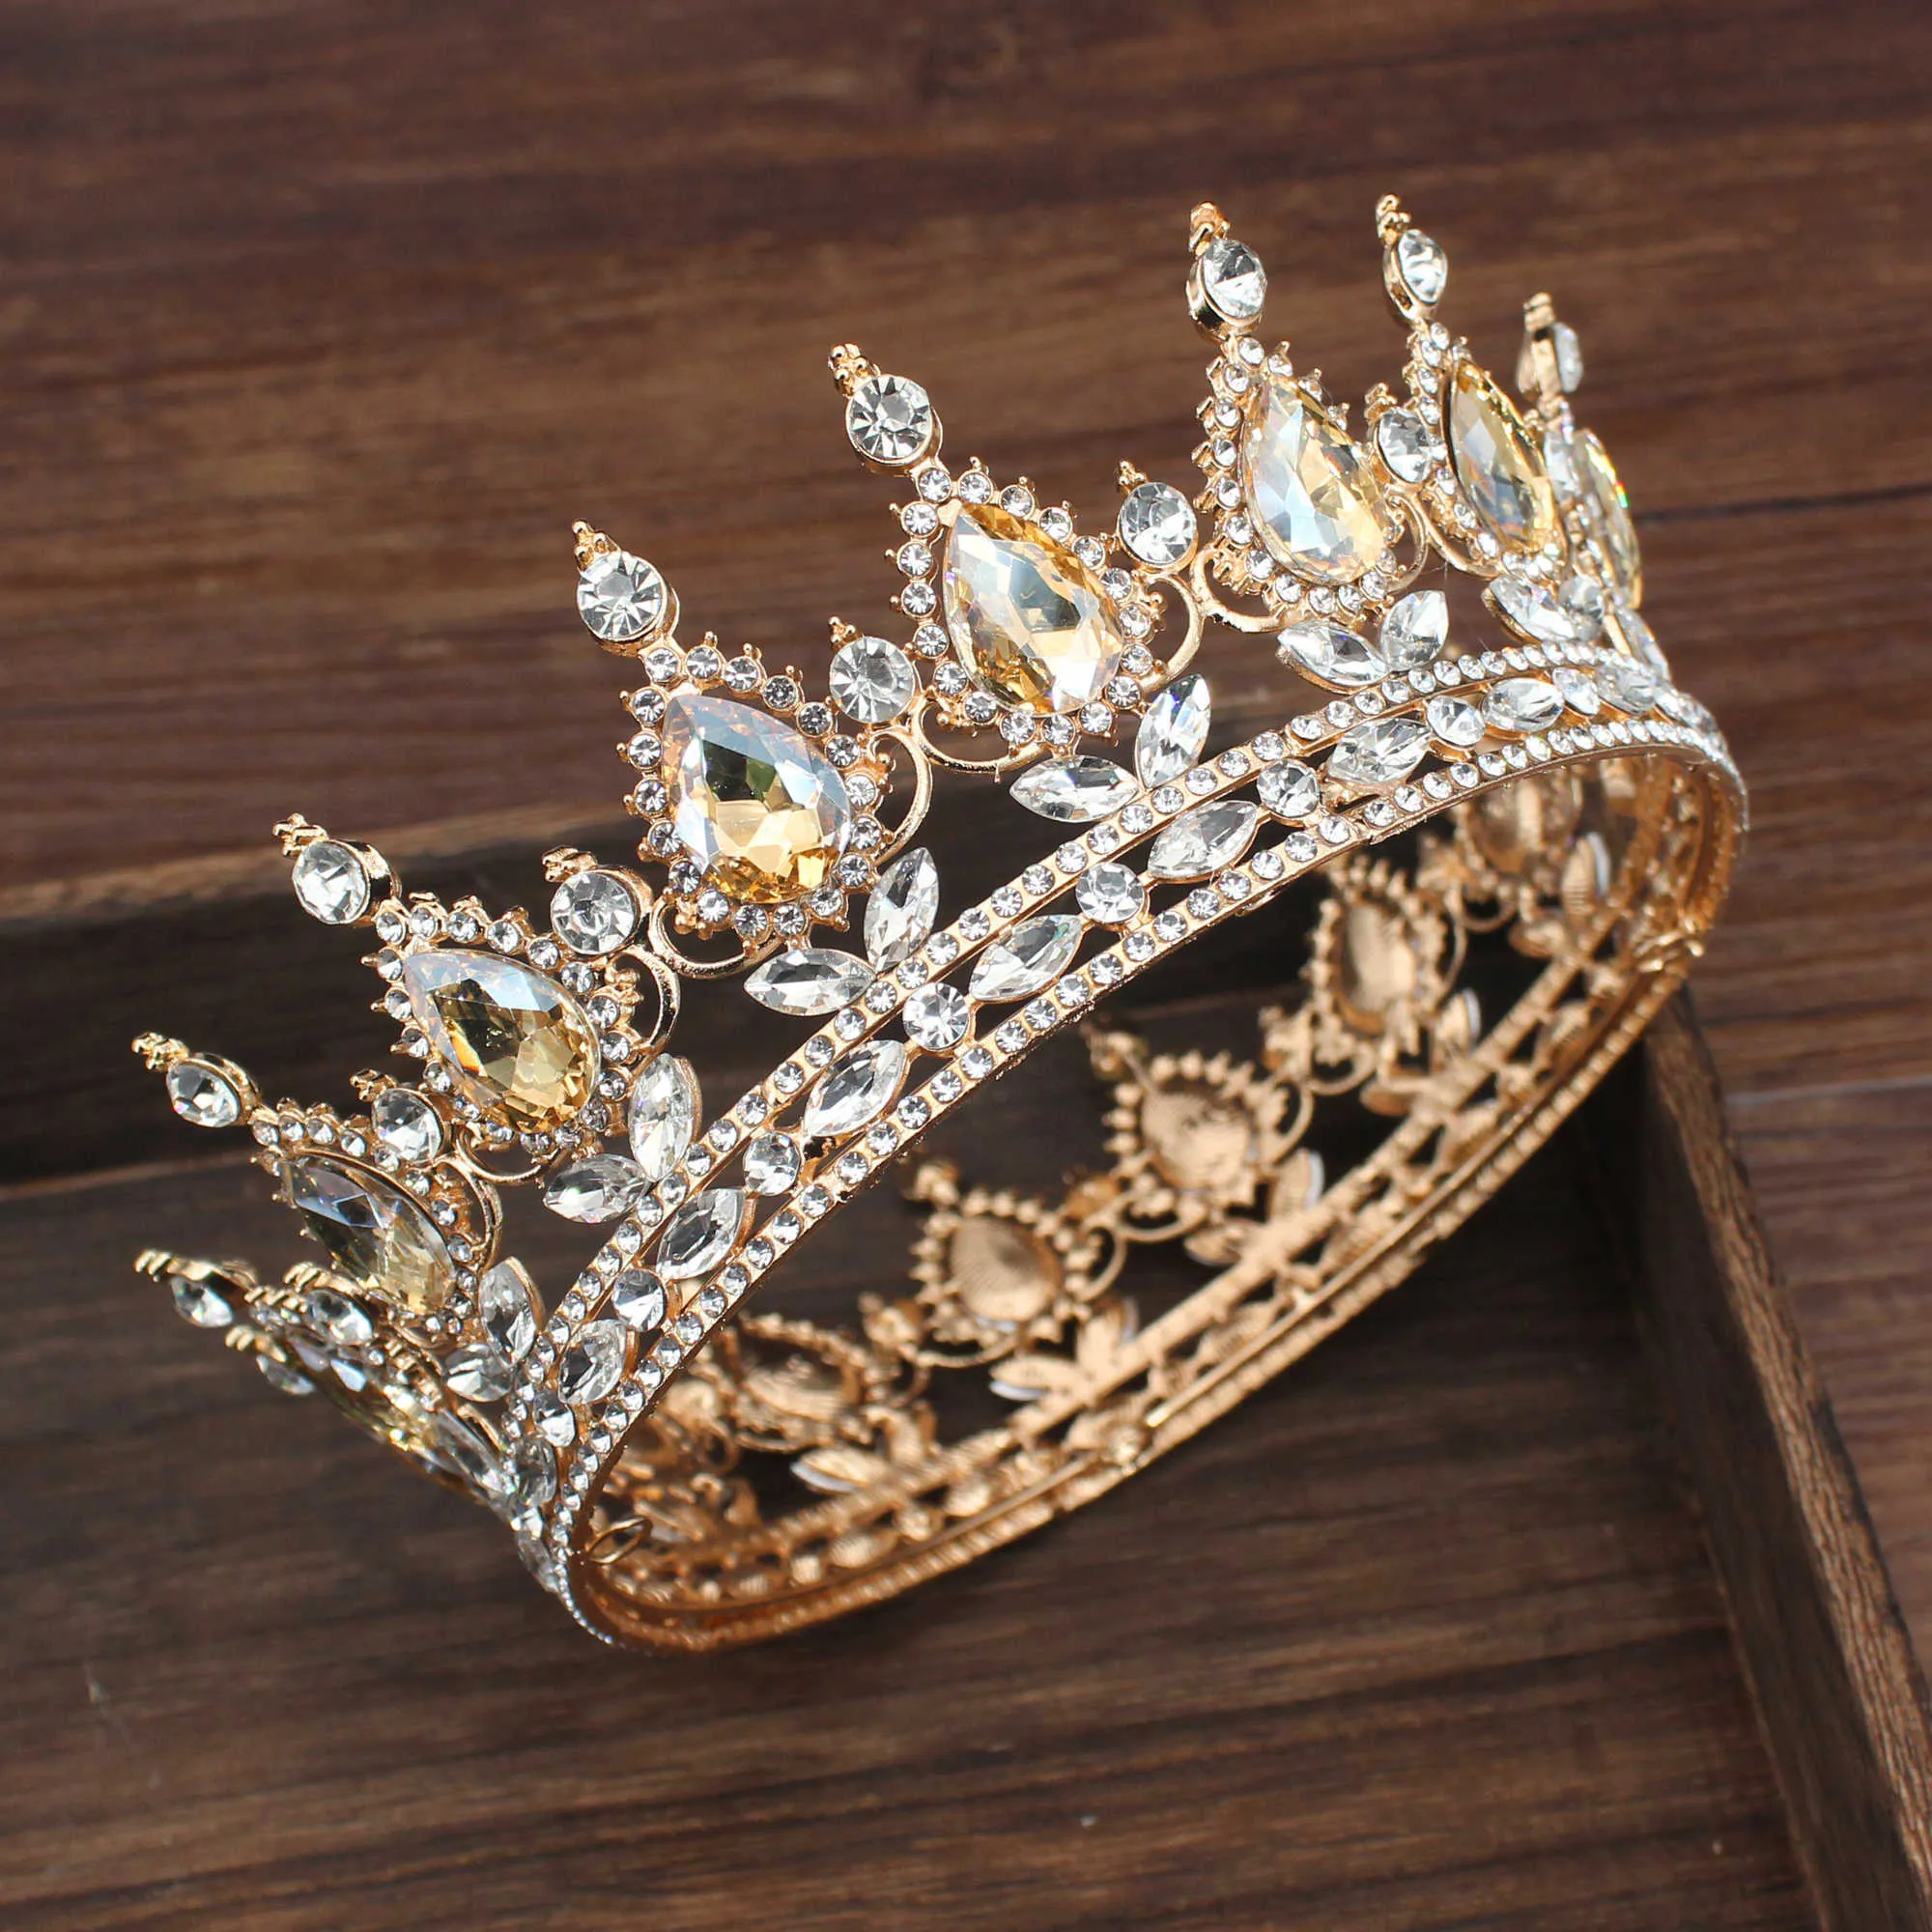 Tiaras Vintage Wedding Queen King King Tiaras и Crowns Bridal Head Jewelry Accessory Accessories Женщины диадема.